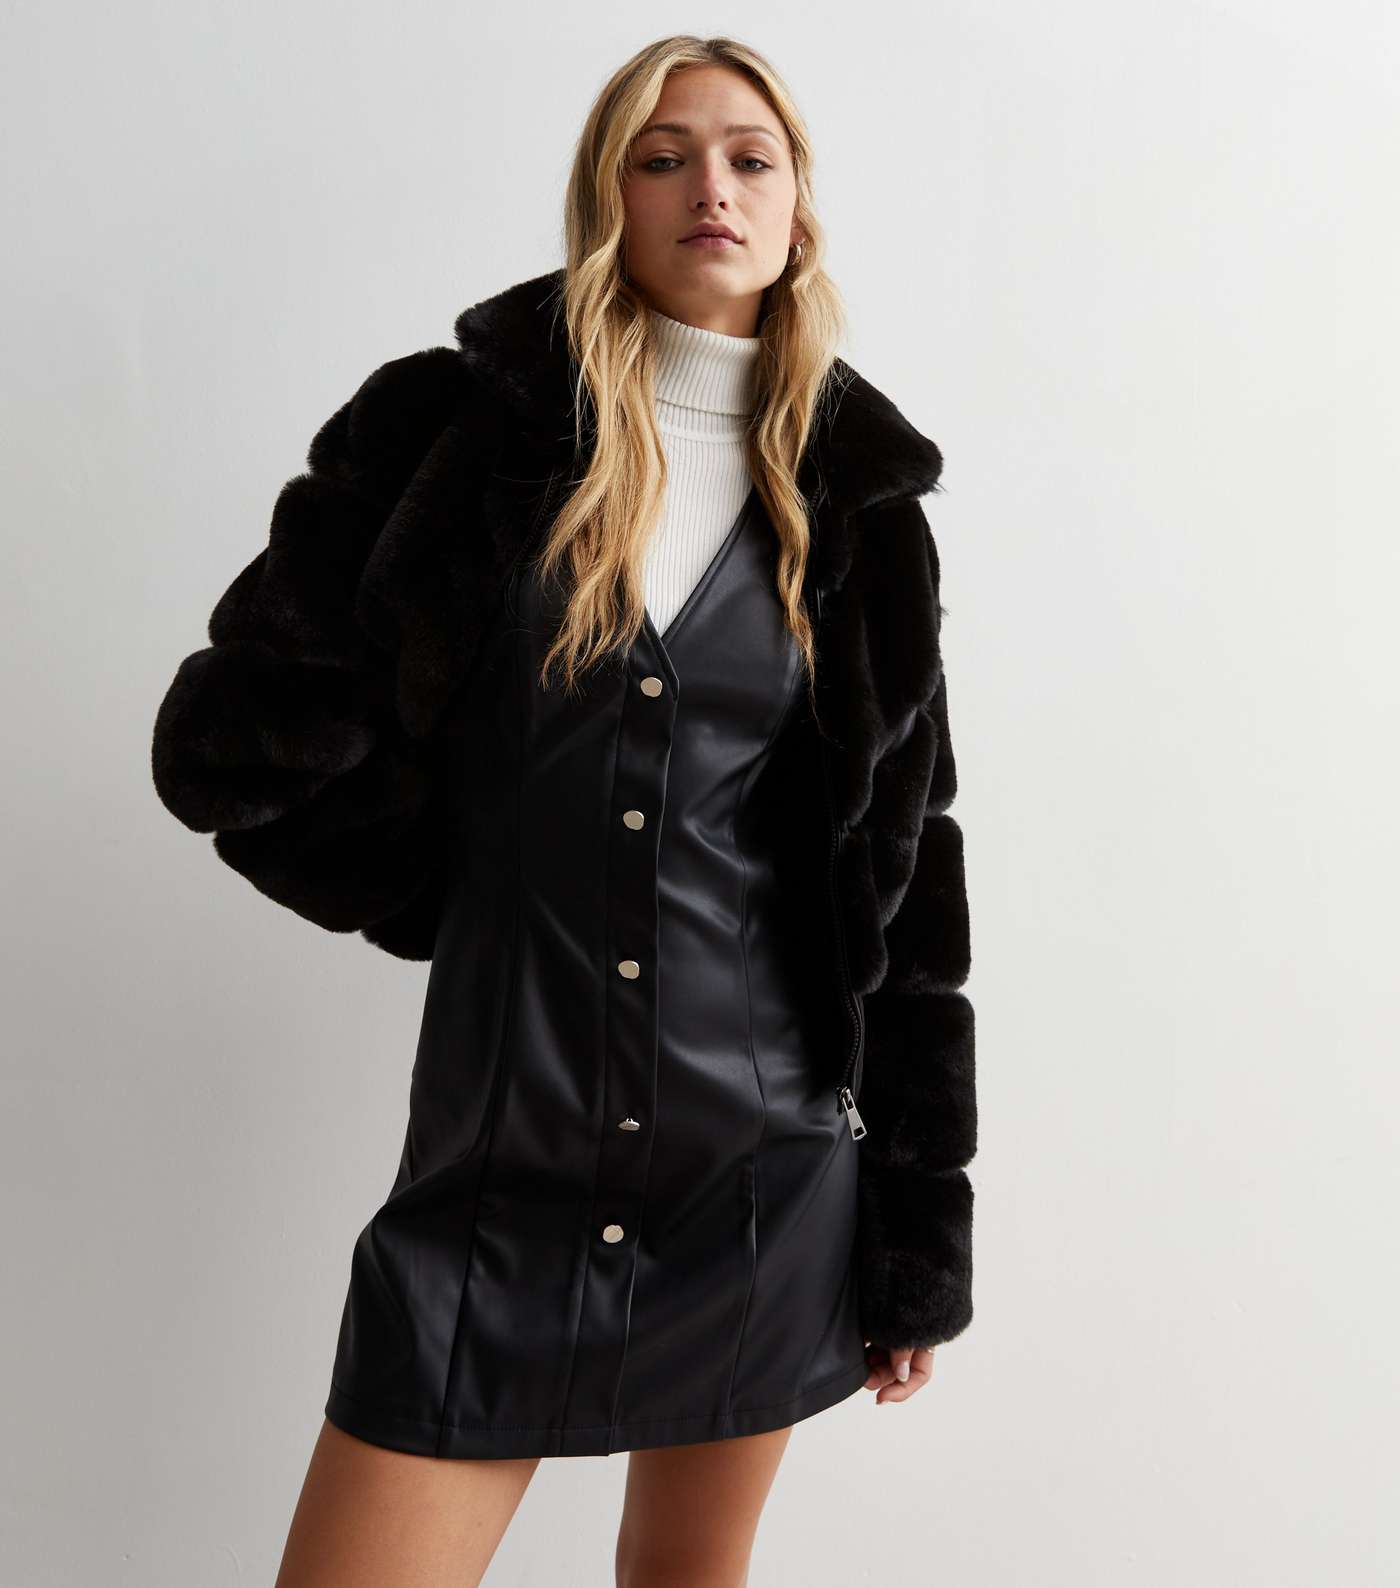 Gini London Black Faux Fur Zip Up Jacket